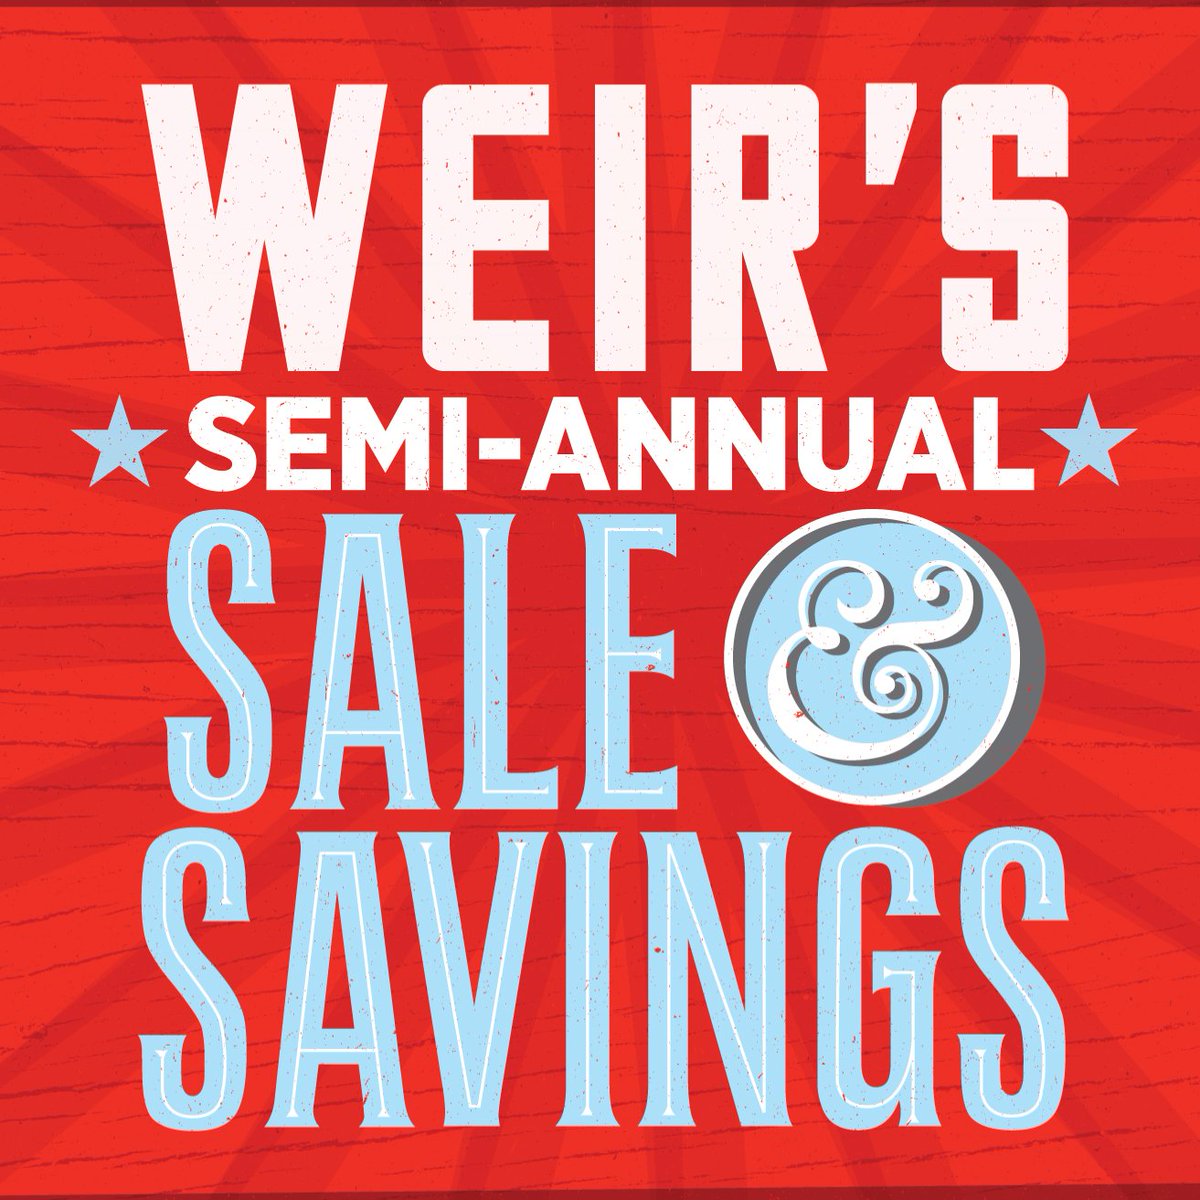 Weir S Furniture On Twitter Weirs Semi Annual Sale Has Begun